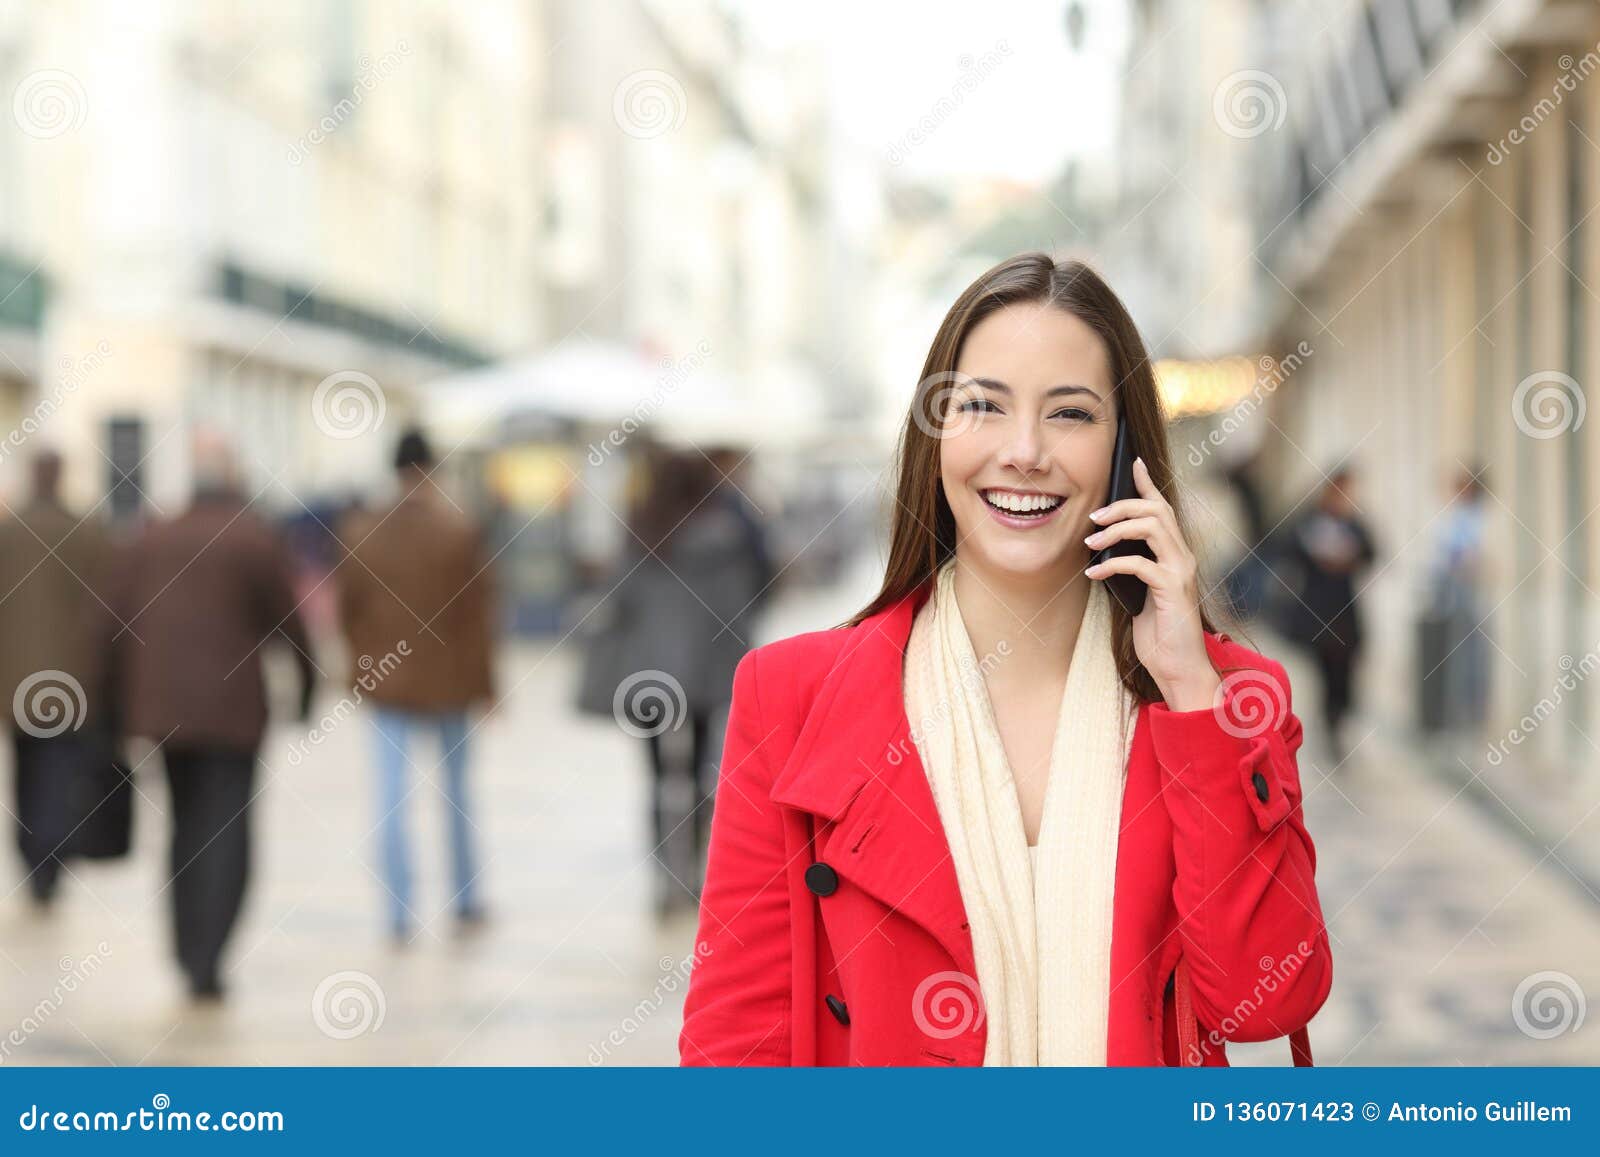 Walk talk блоггер. Человек разговаривает по телефону на улице. Говорит по телефону на улице. Женщина разговаривает по телефону на улице. Женщина радостно говорит по телефону.